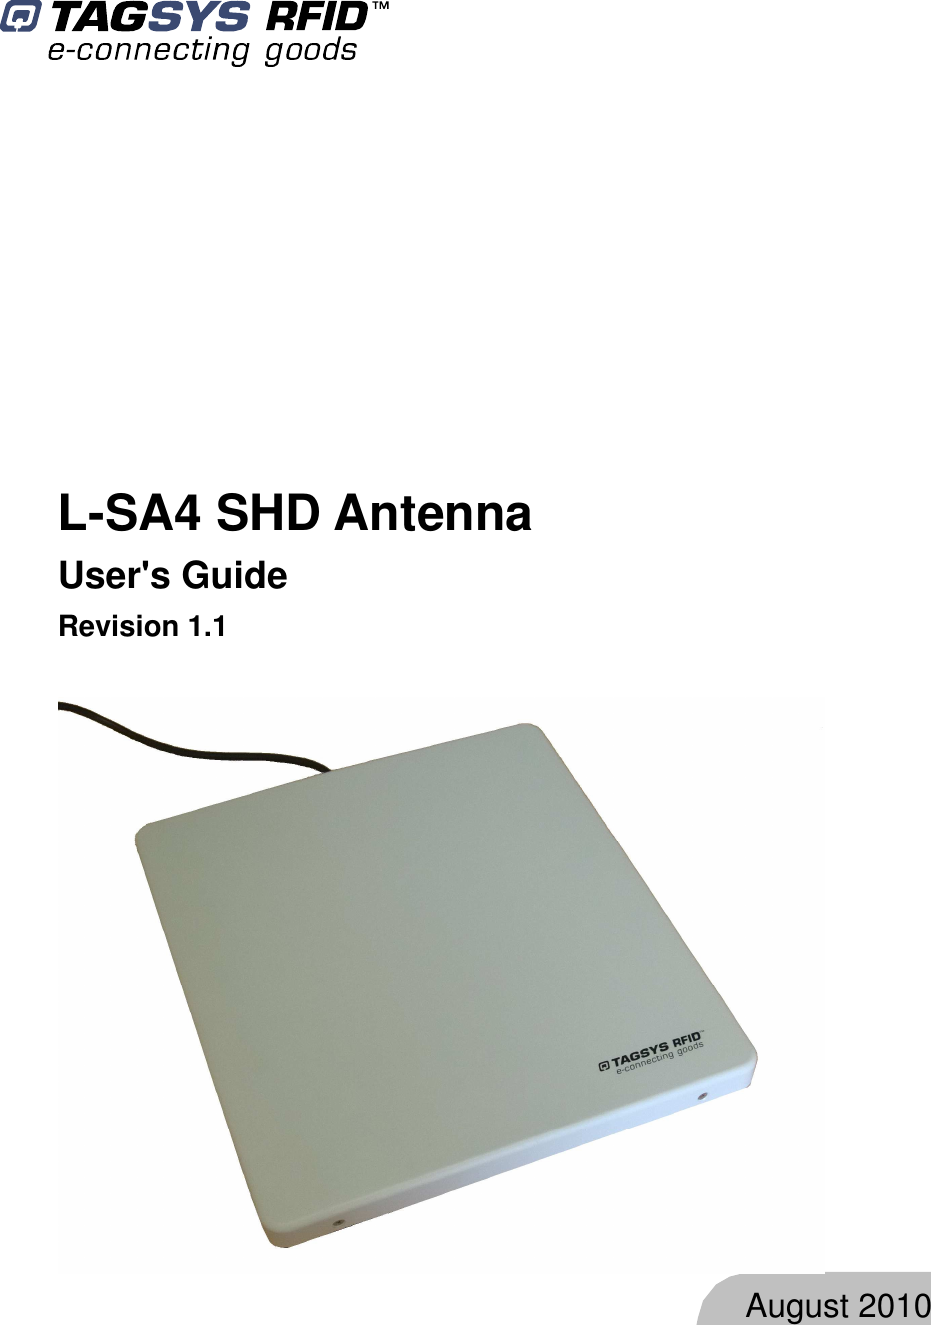              L-SA4 SHD Antenna User&apos;s Guide Revision 1.1   August 2010  